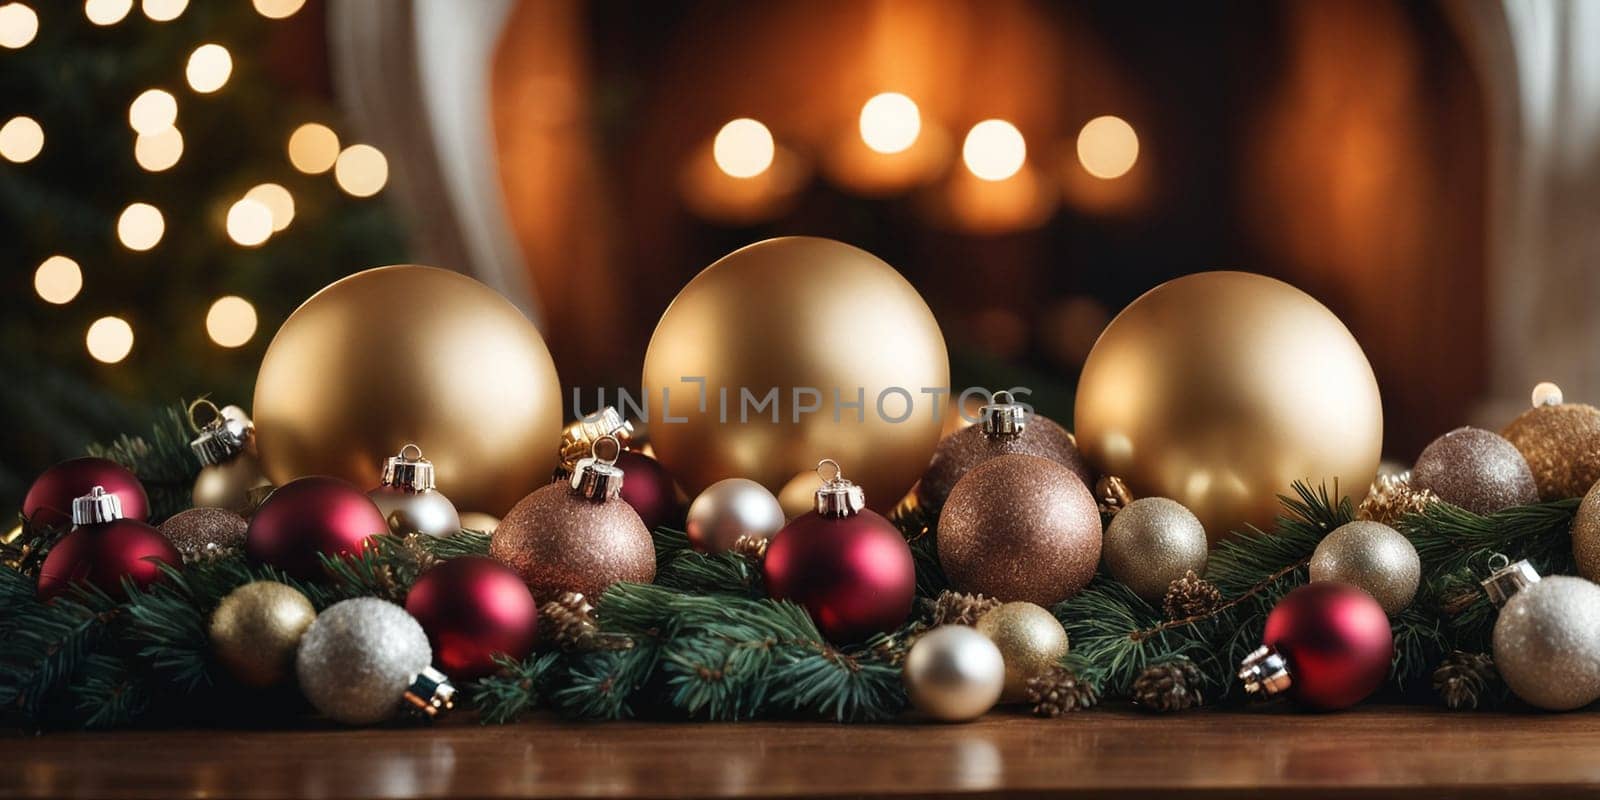 Lovely Christmas background. High quality illustration